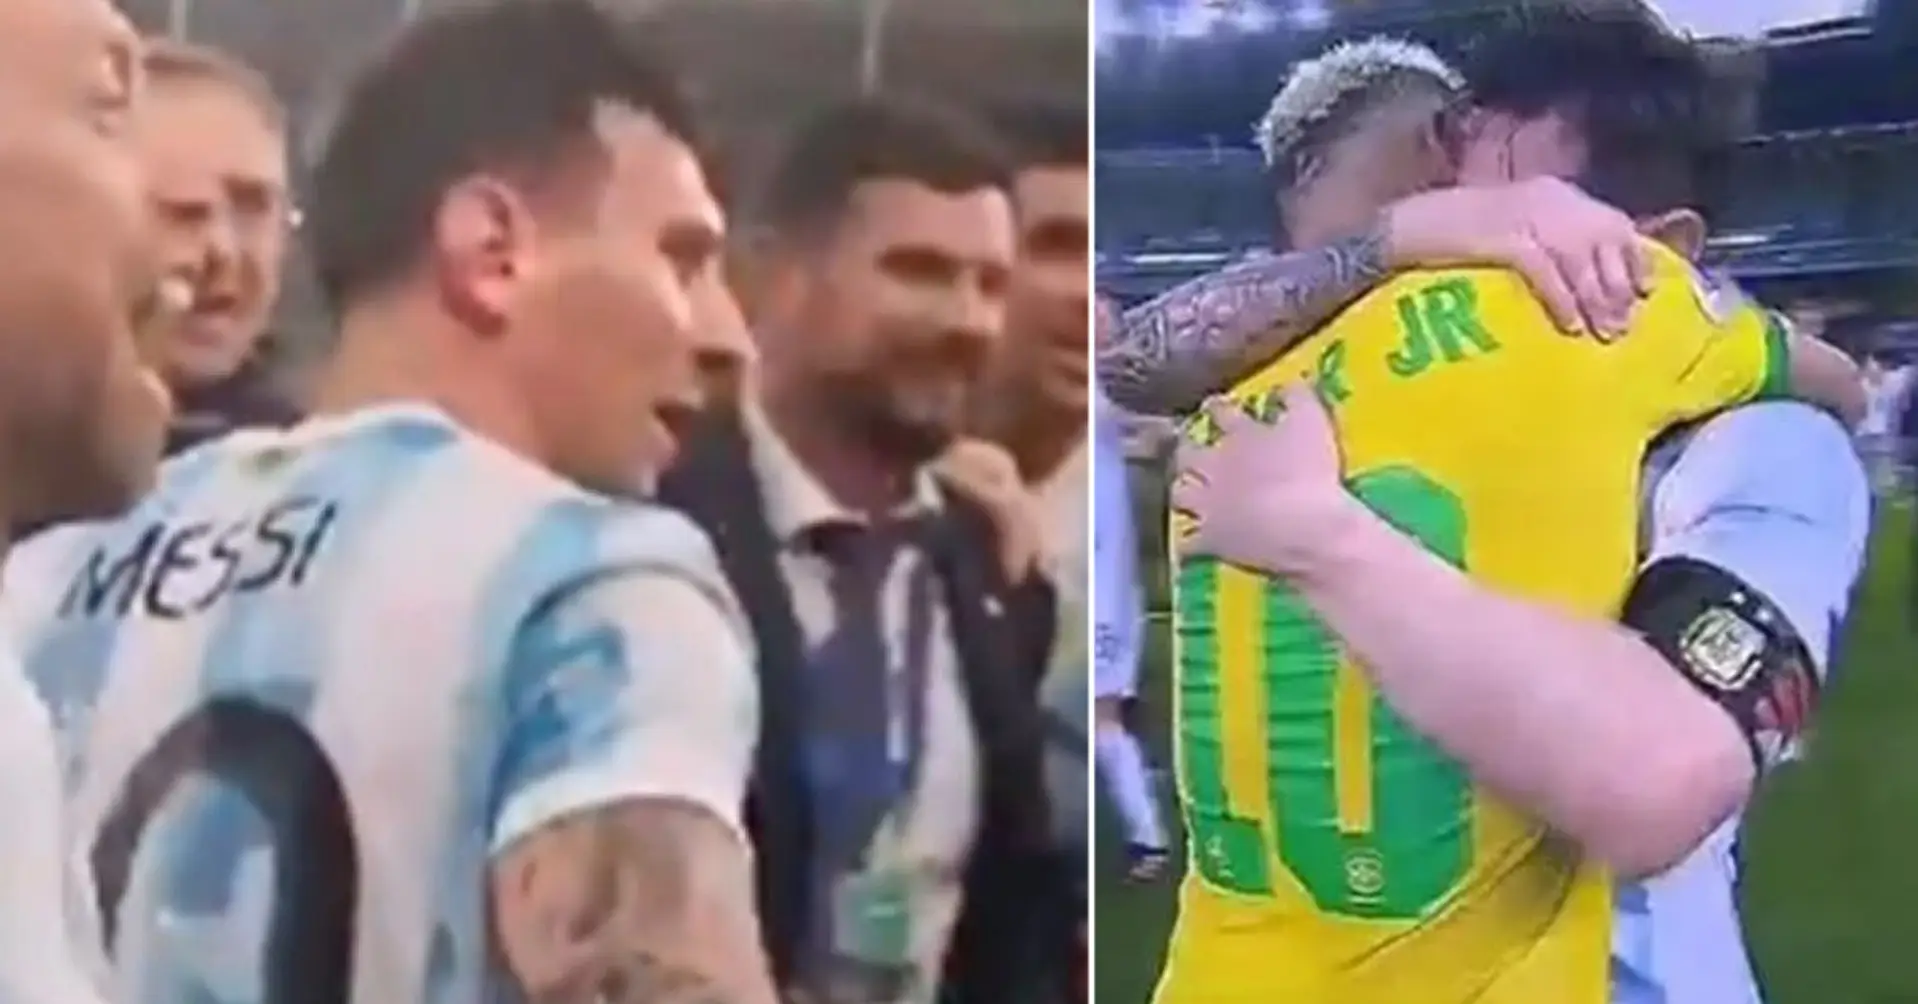 Las cámaras captan a Messi riñendo a un compañero que insultó a Brasil durante la celebración